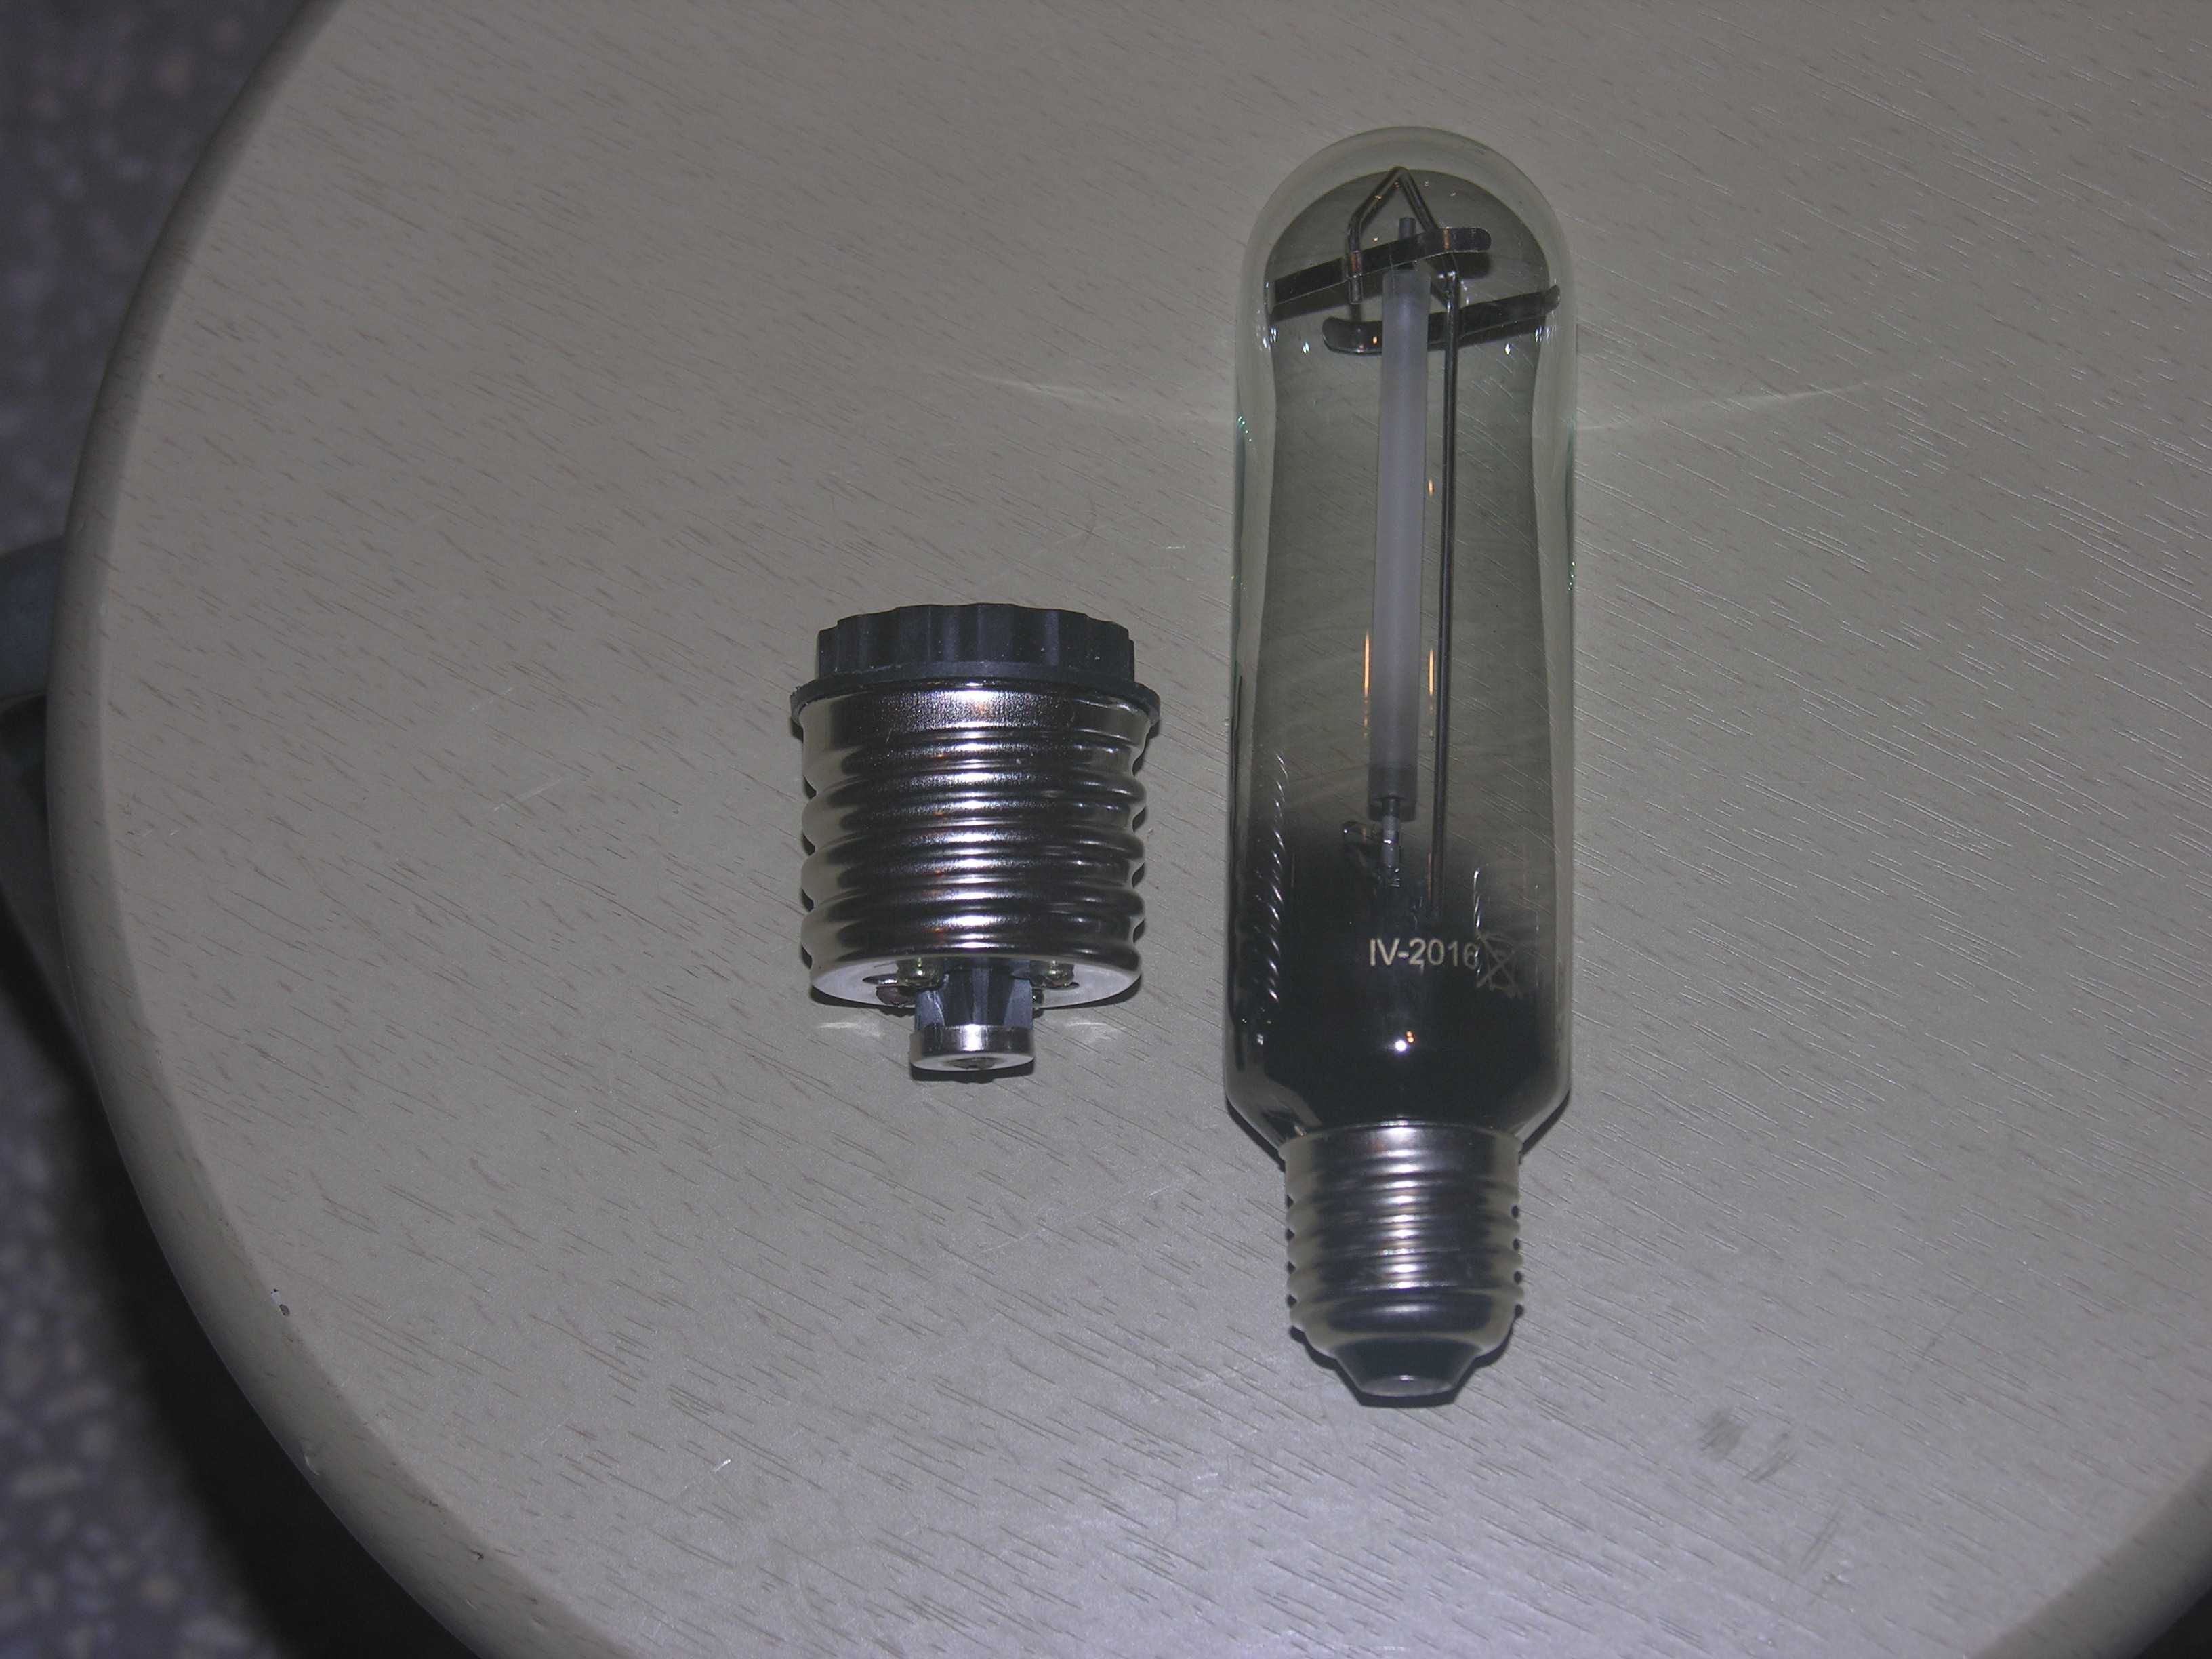 Комплект для ламп ДНаТ 70 и МГЛ(металлогалогенных ламп )